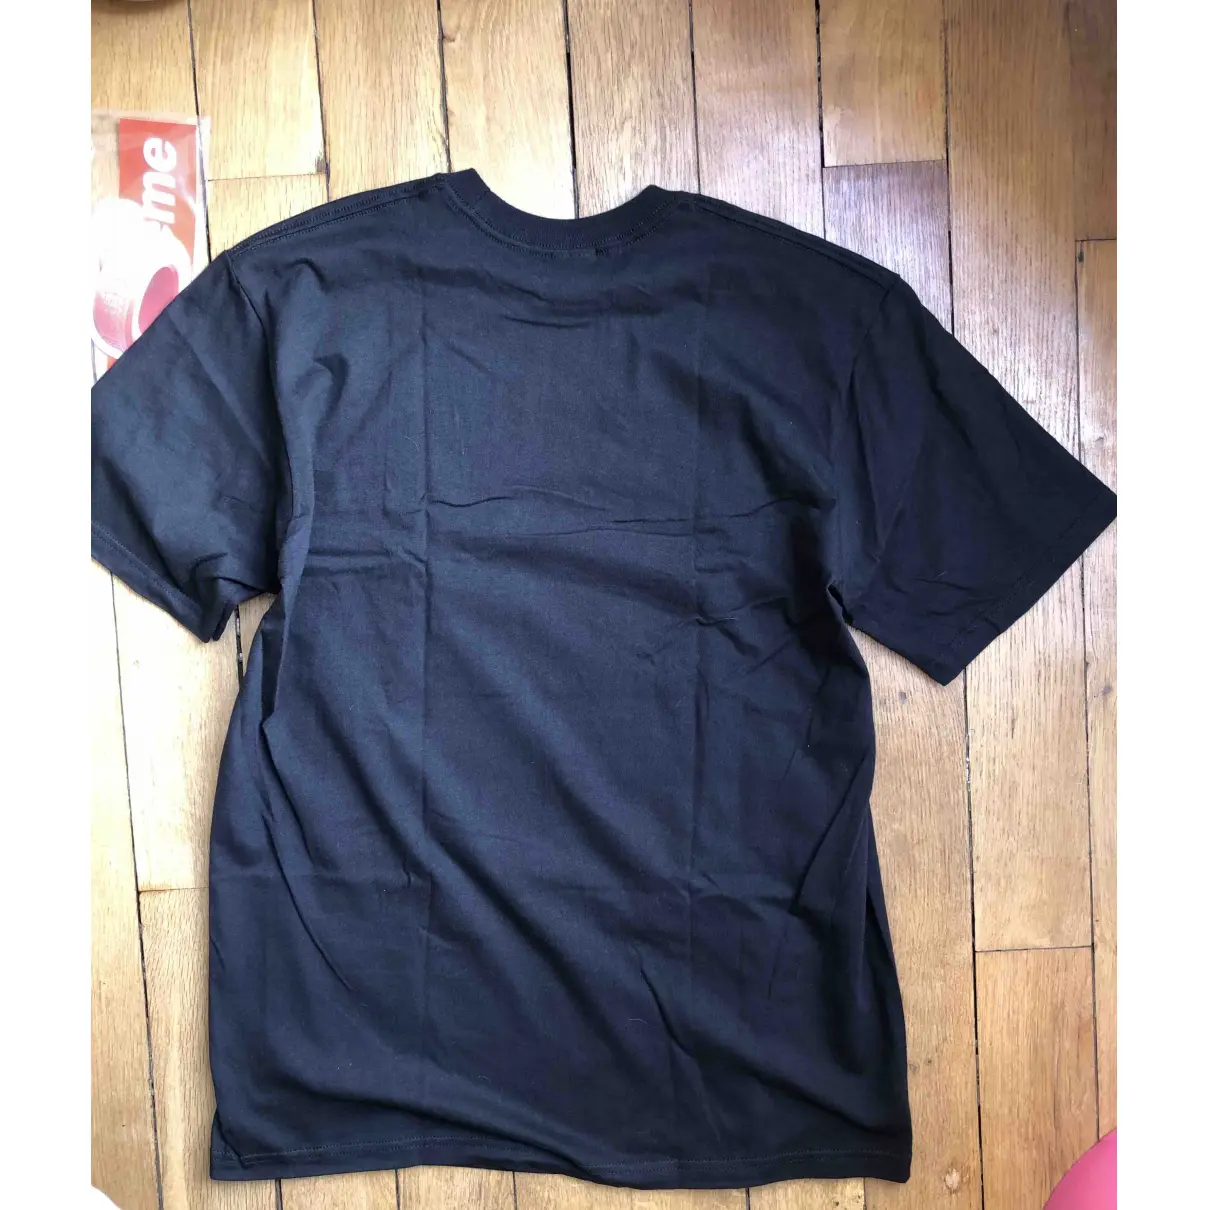 Buy Supreme Black Cotton T-shirt online